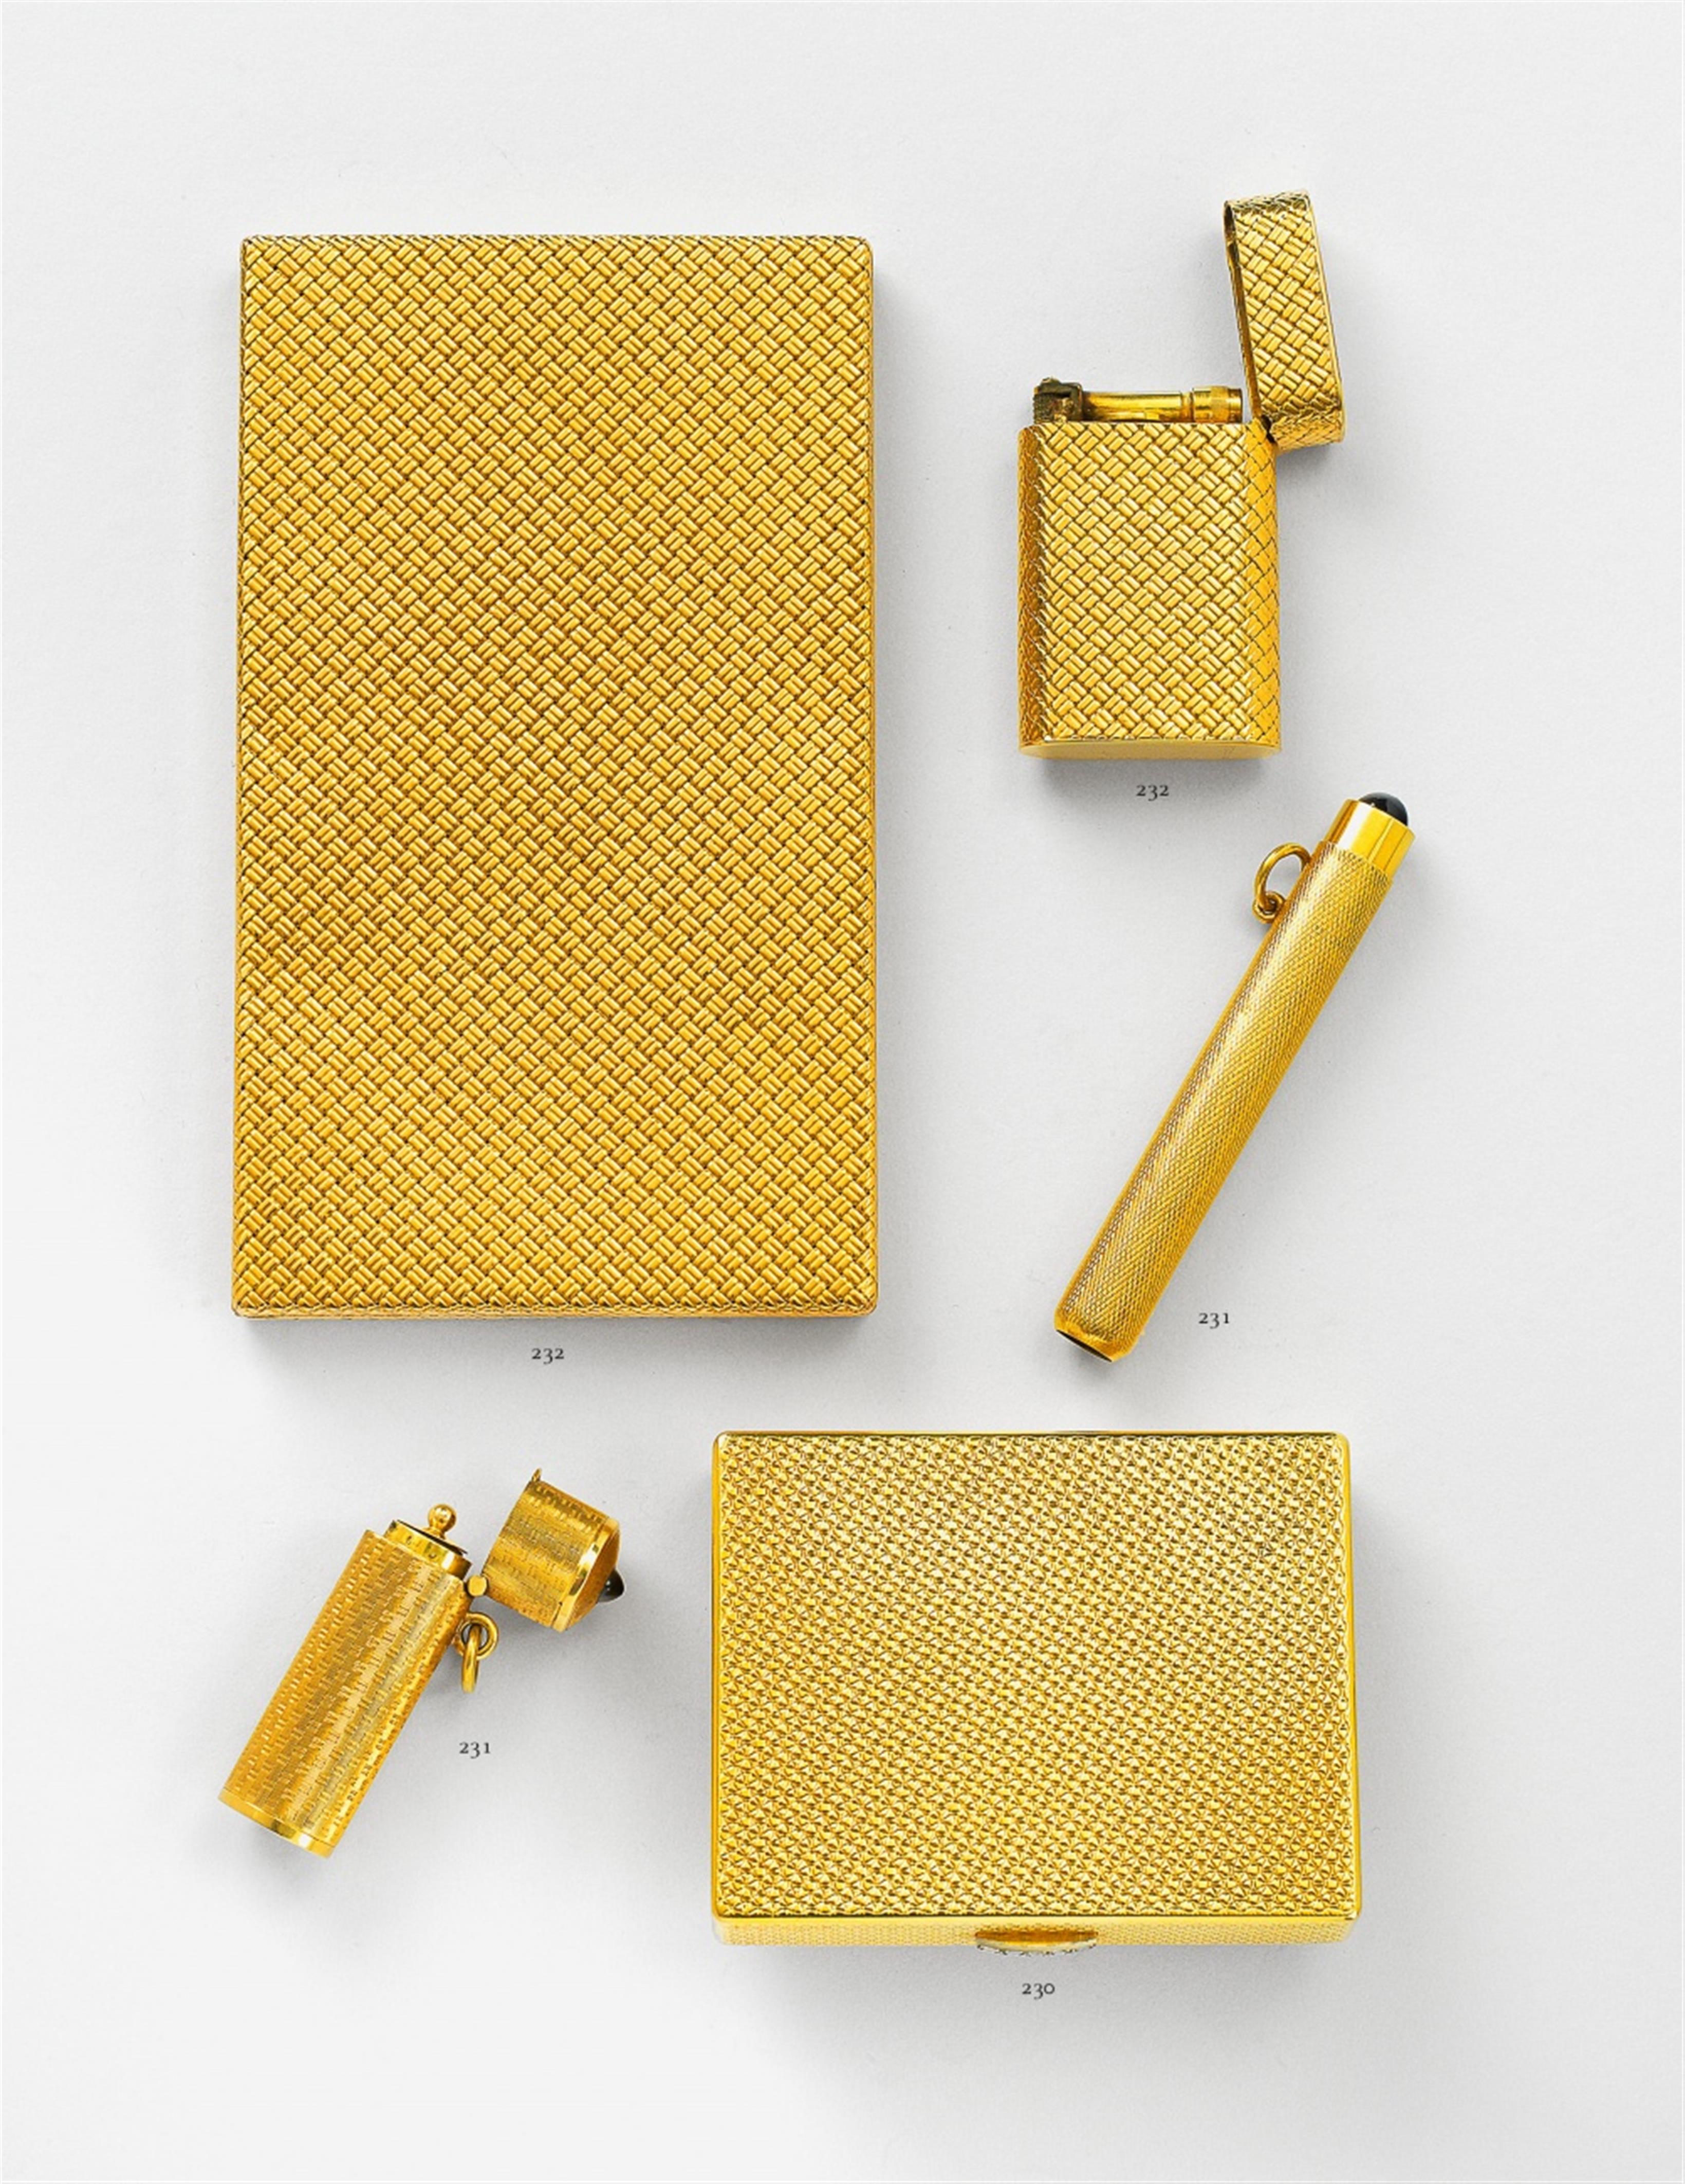 An 18k gold cigarette case - image-1